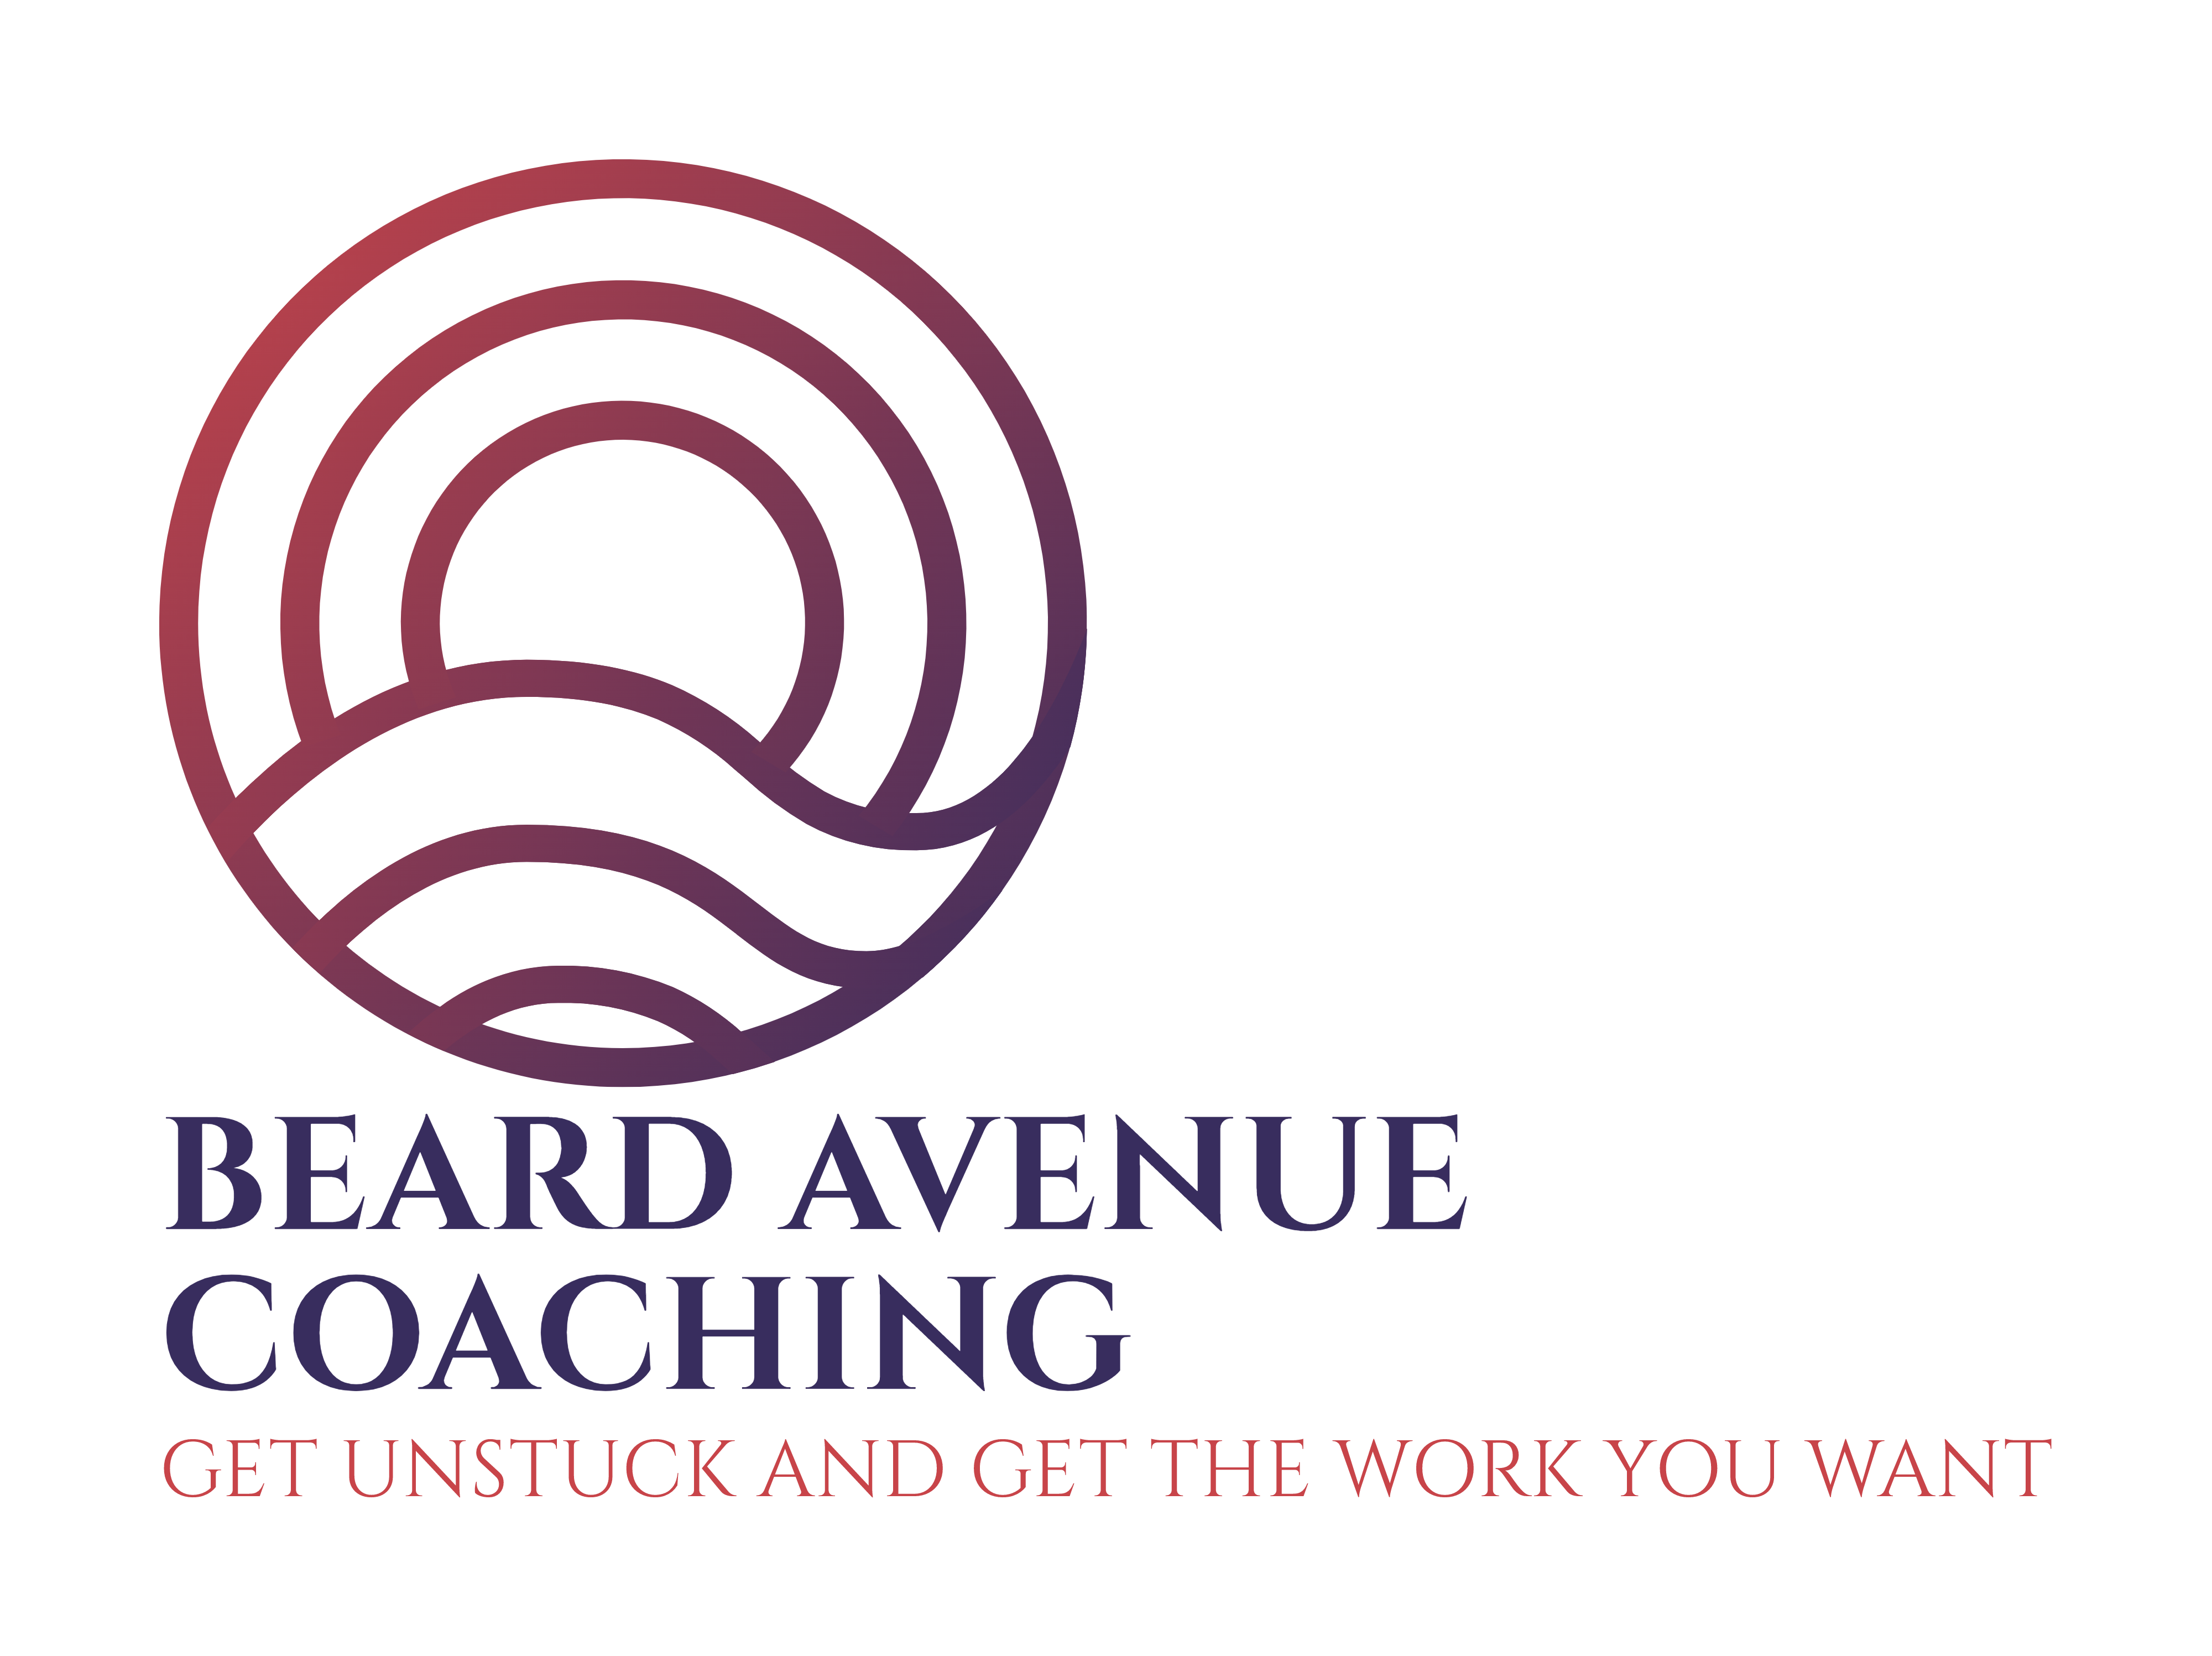 Career Coaching – Beard Avenue